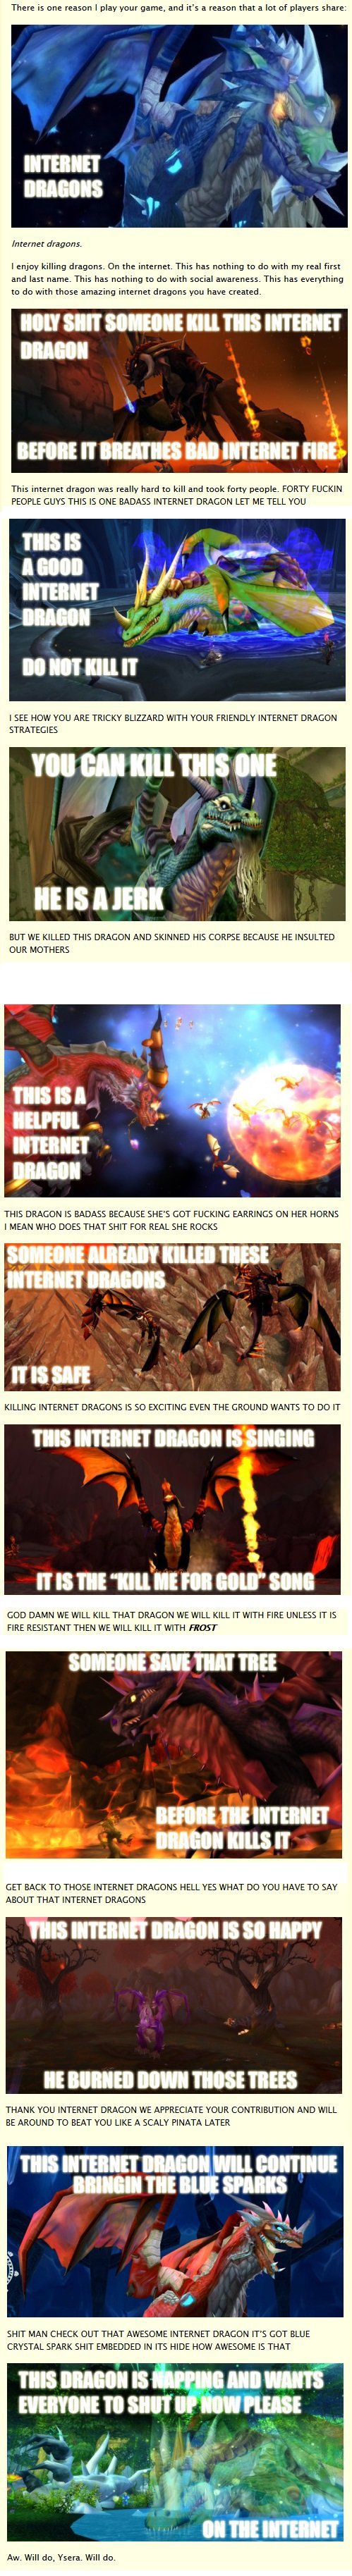 Killing internet dragons